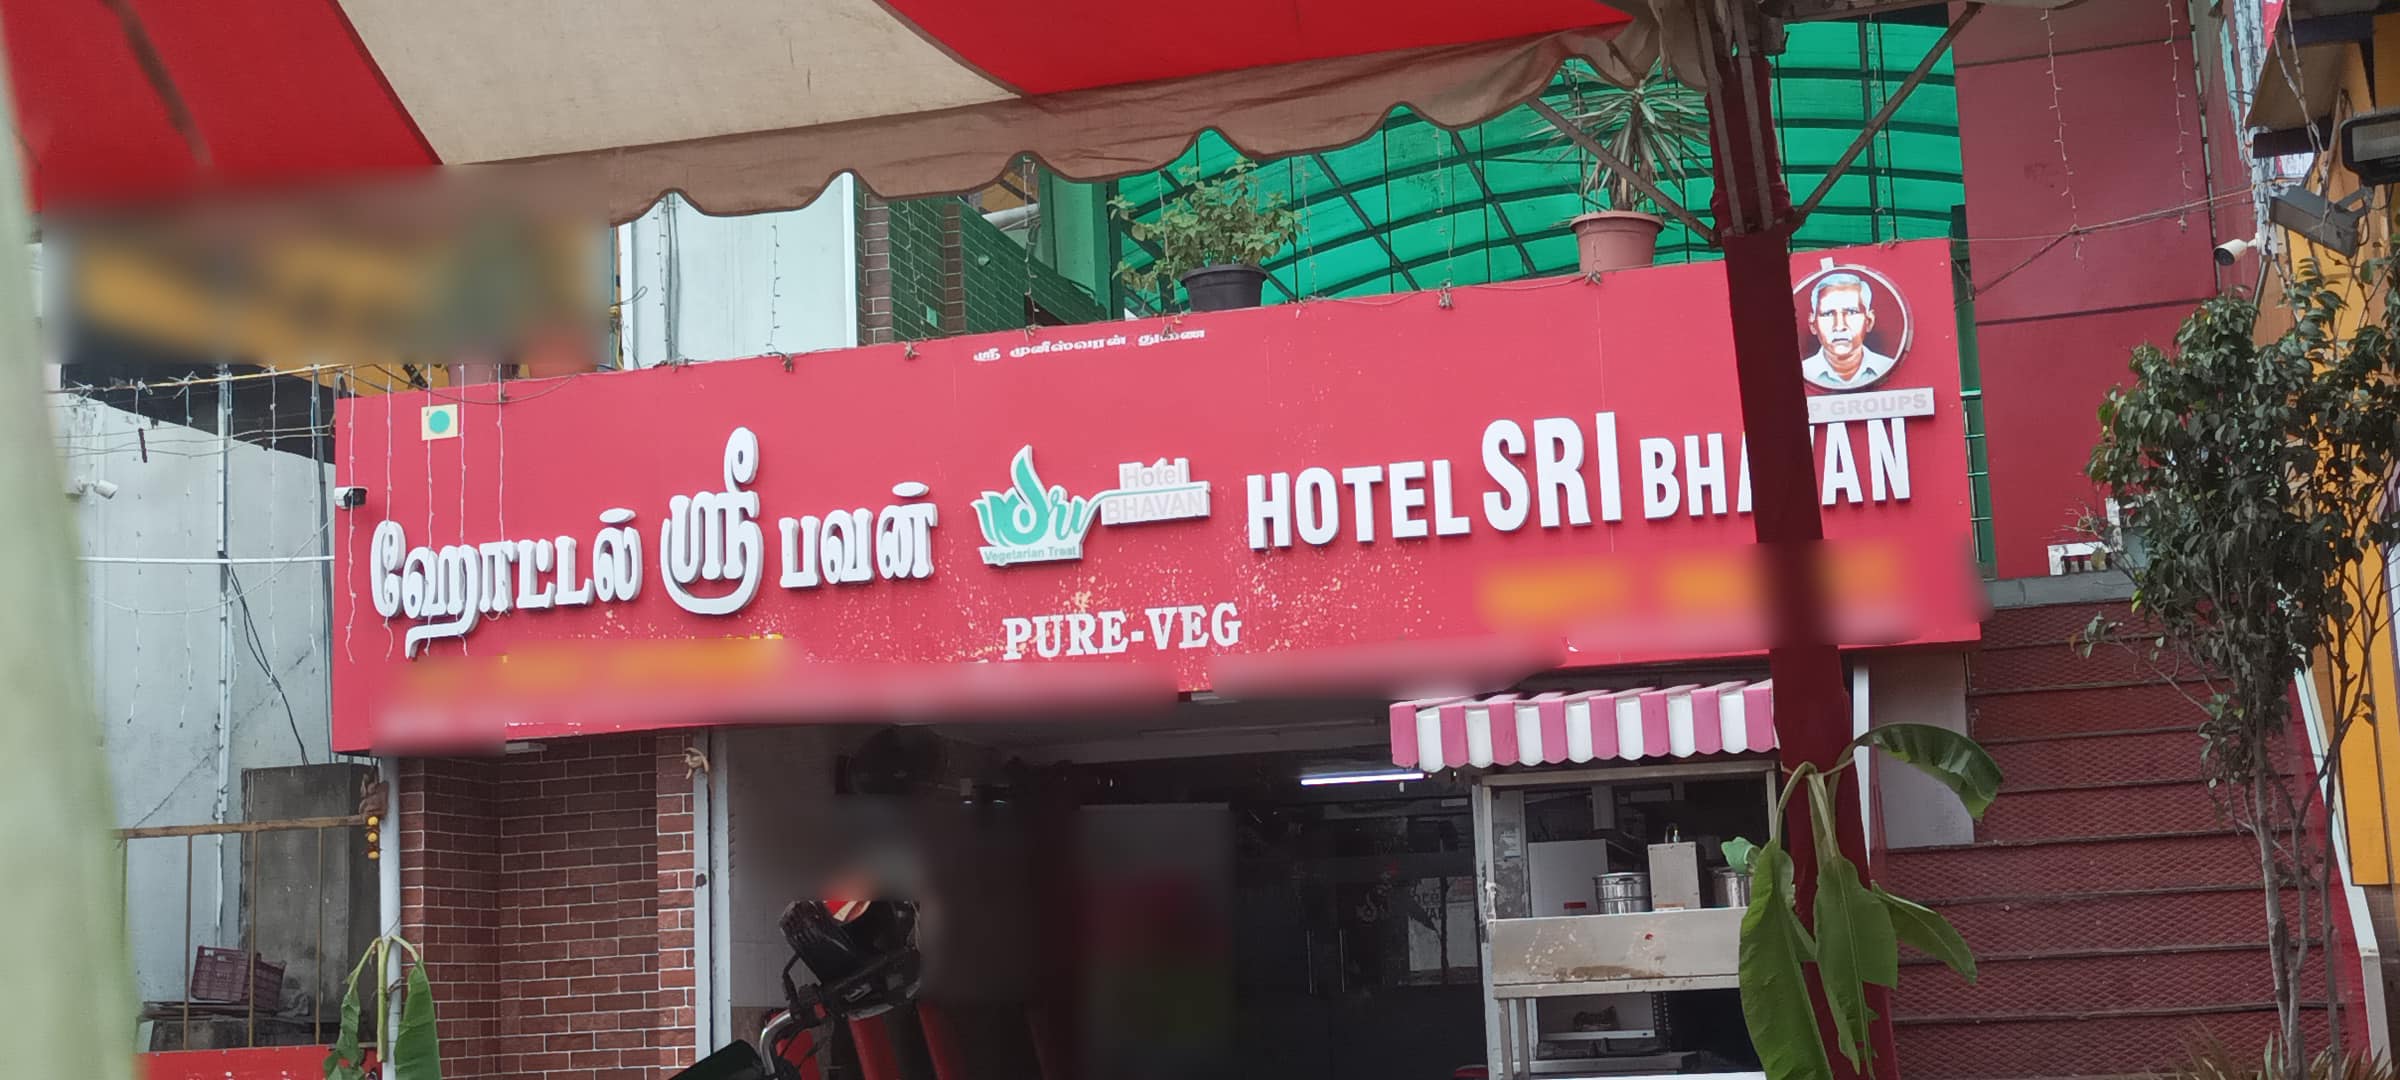 Hotel Sri Bhavan, Selaiyur, Chennai | Zomato